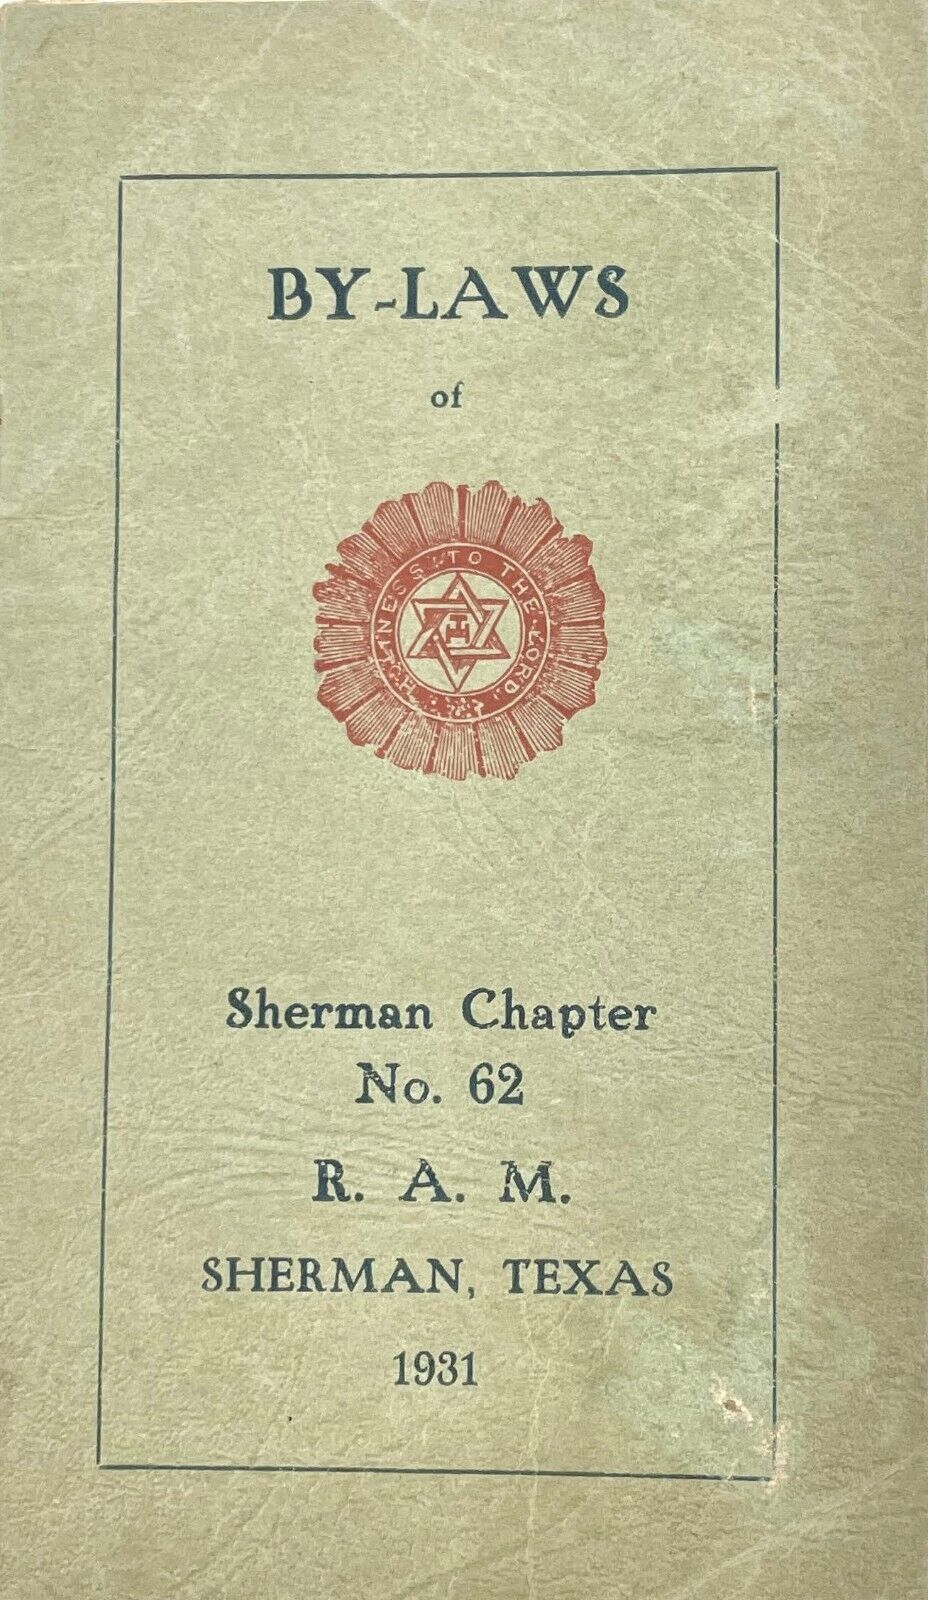 1931 By-Laws of Royal Arch Masons, Sherman Chapter No. 62, Sherman, Texas